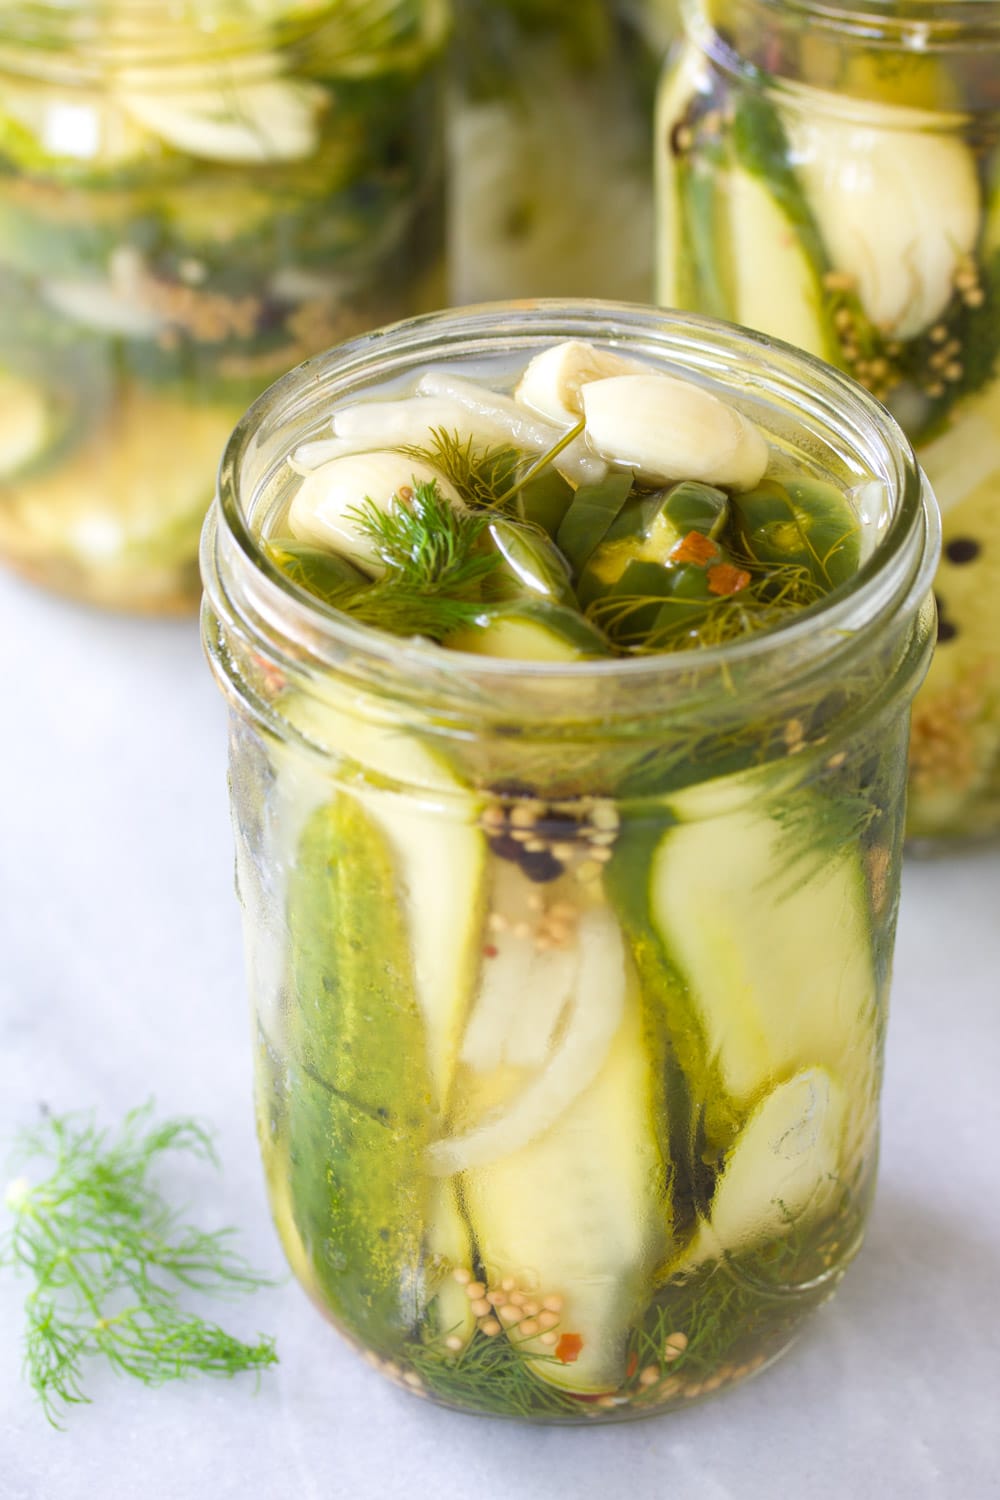 Ingredients in Jar #ASpicyPerspective #Pickles #RefrigeratorPickles #HomemadePickles #PickleRecipe #HowtoMakePickles